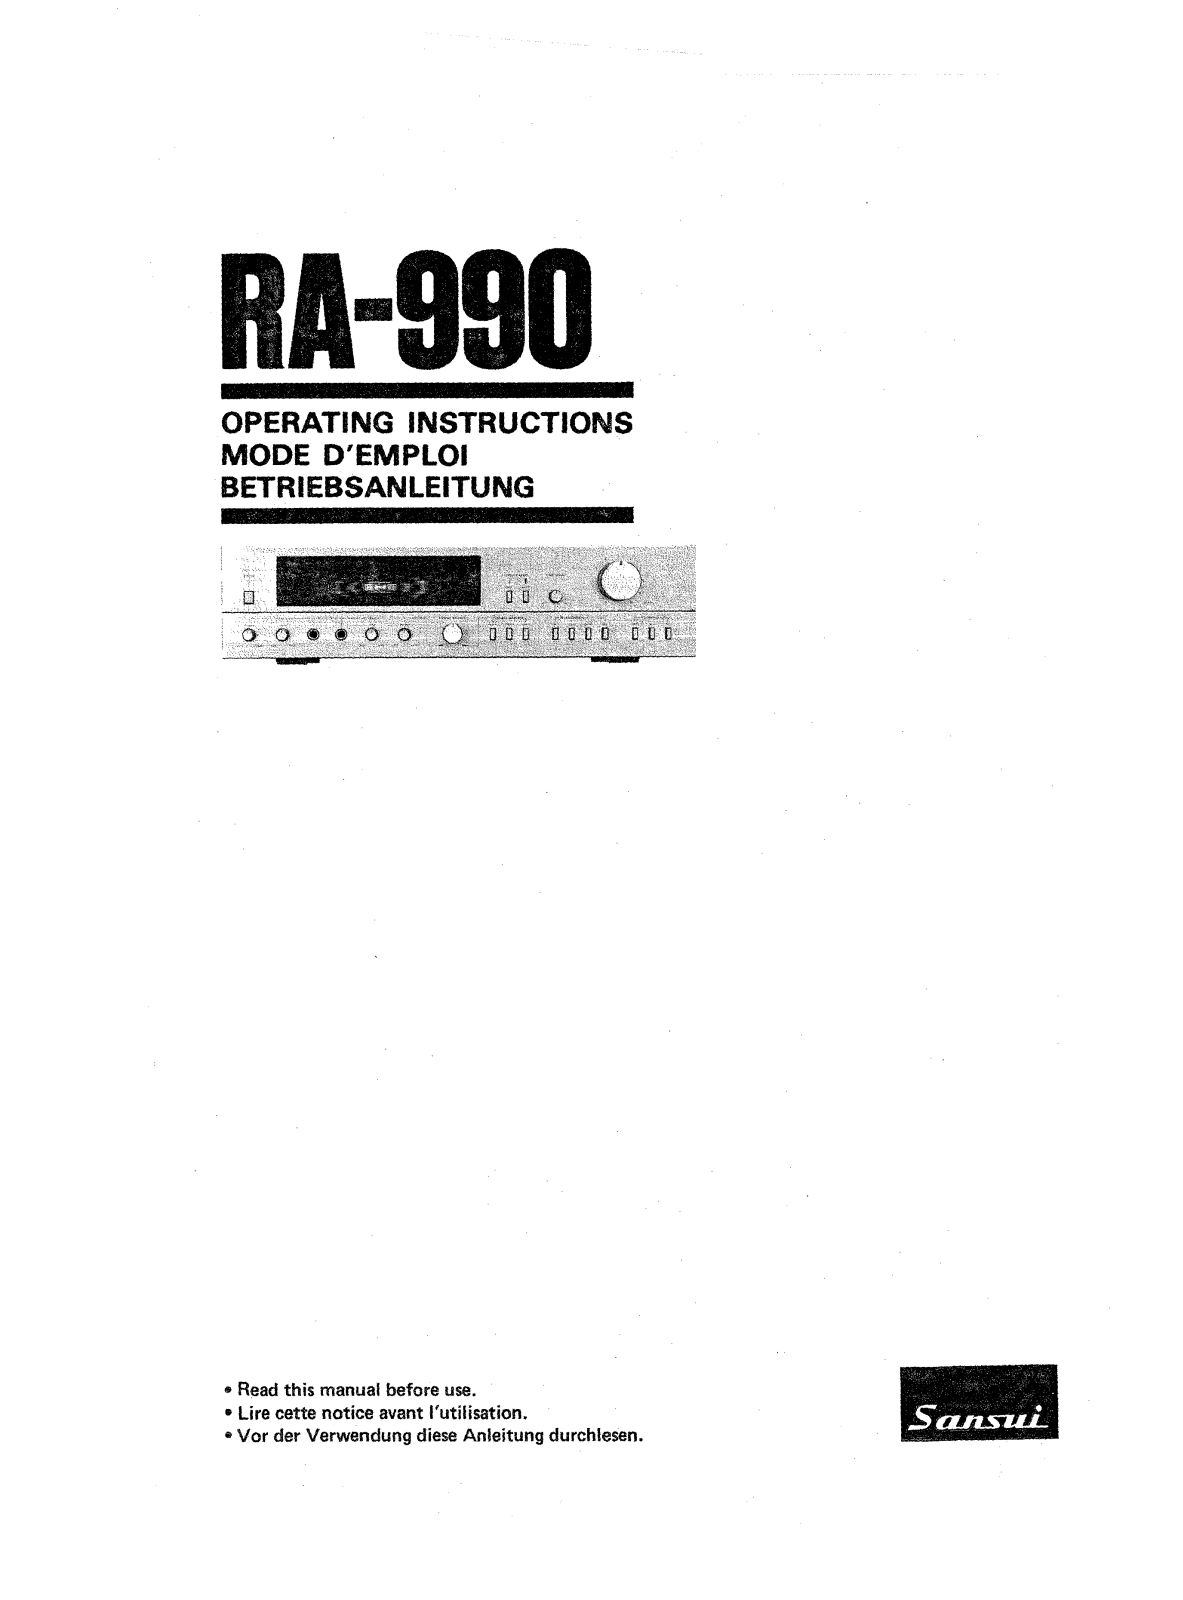 Sansui RA-990 Owners manual